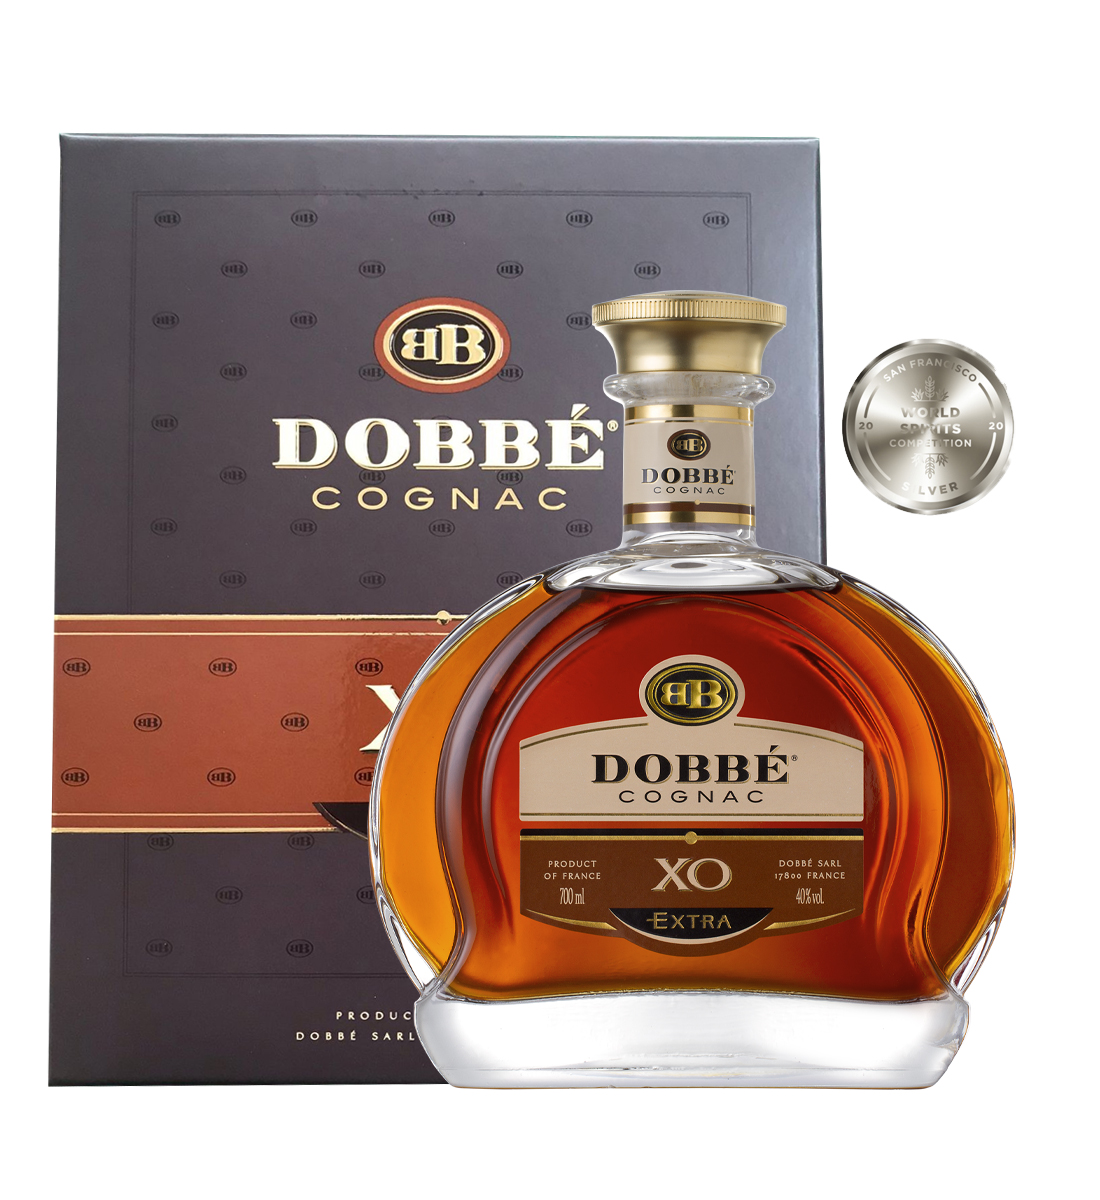 Cognac Dobbe XO Extra 0.7L